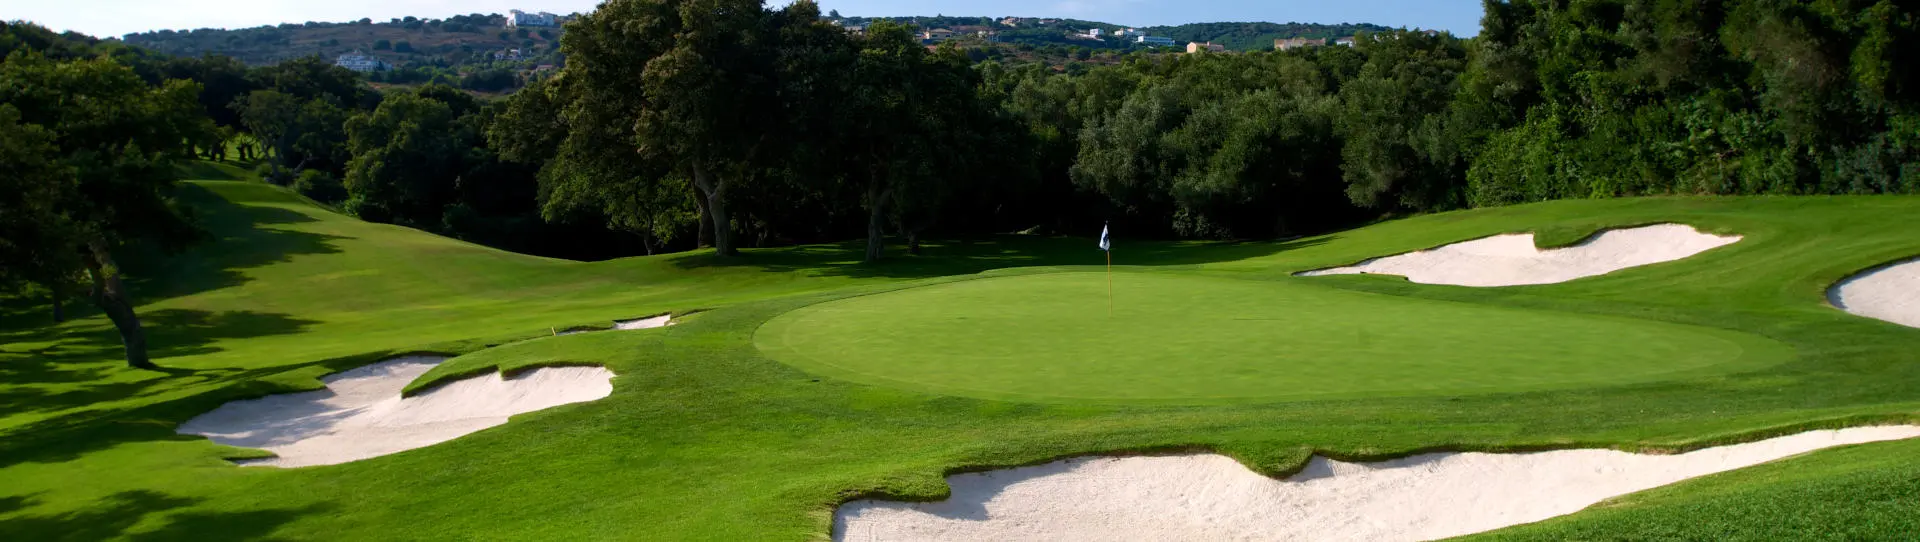 Spain golf courses - Valderrama Golf Club - Photo 1